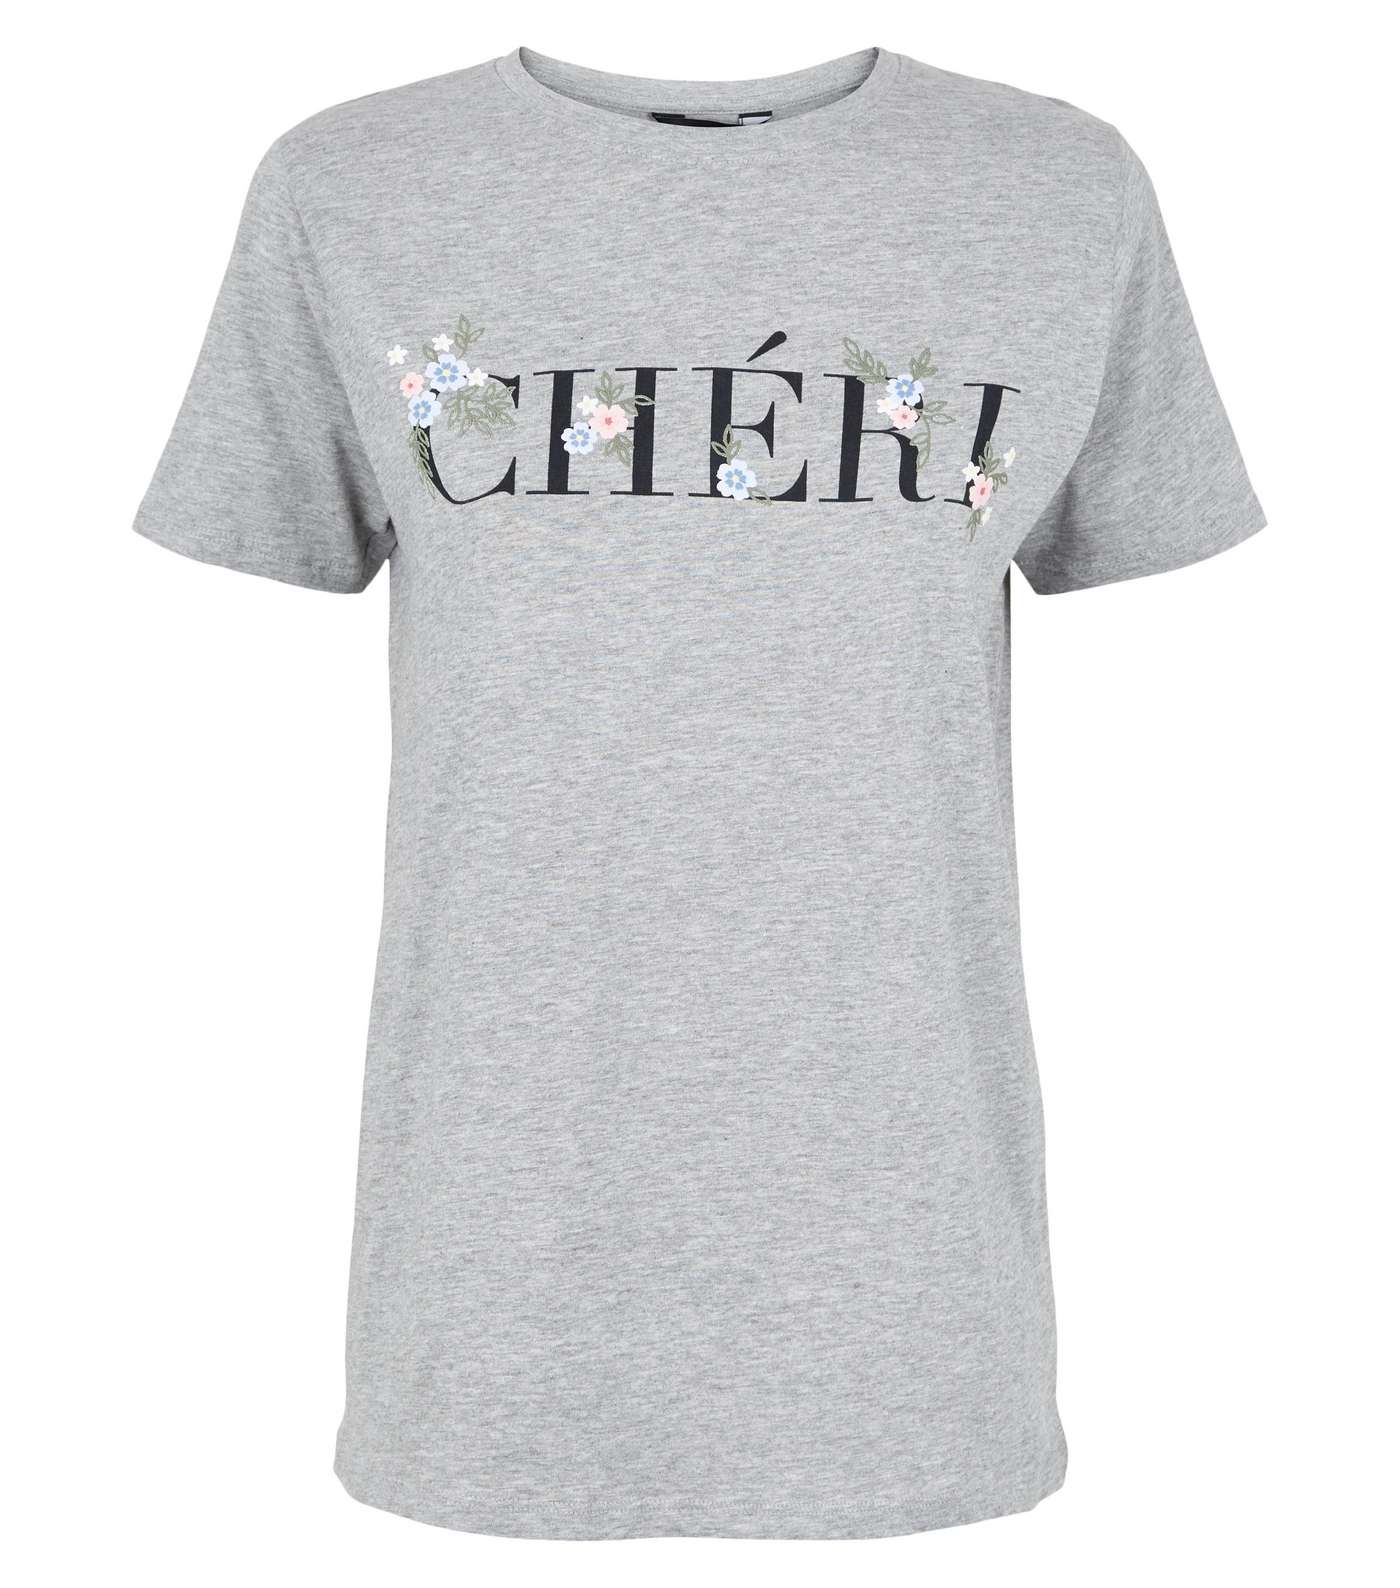 Grey Marl Floral Chéri Slogan T-Shirt Image 4